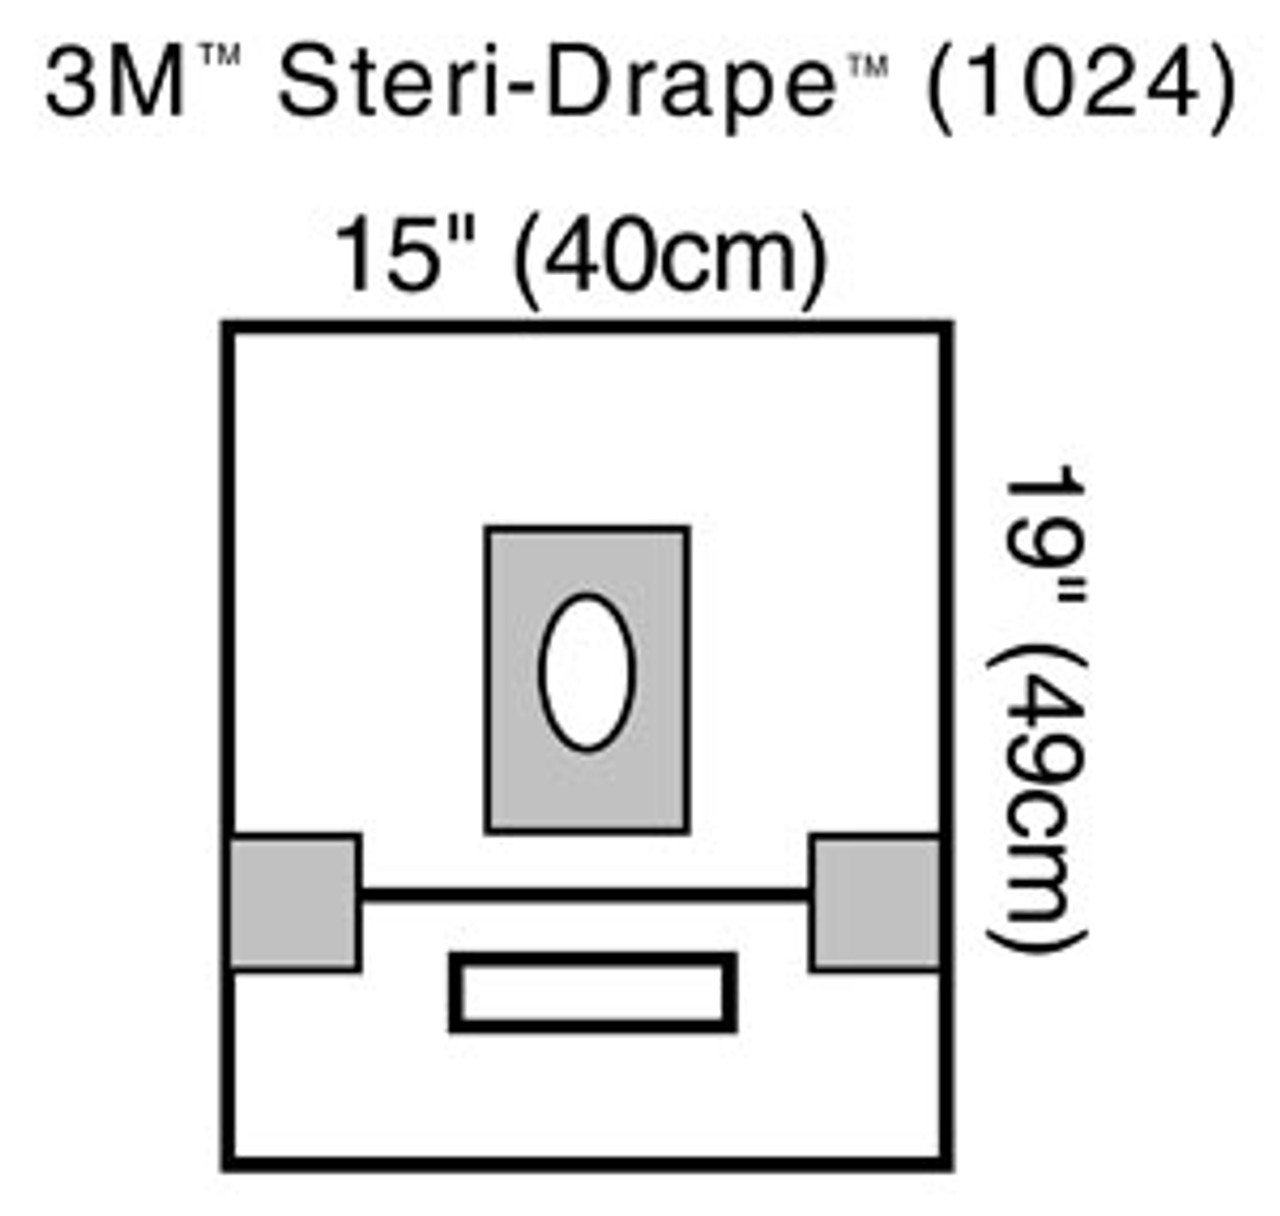 3M STERI-DRAPE OPHTHALMIC SURGICAL DRAPES, 1024